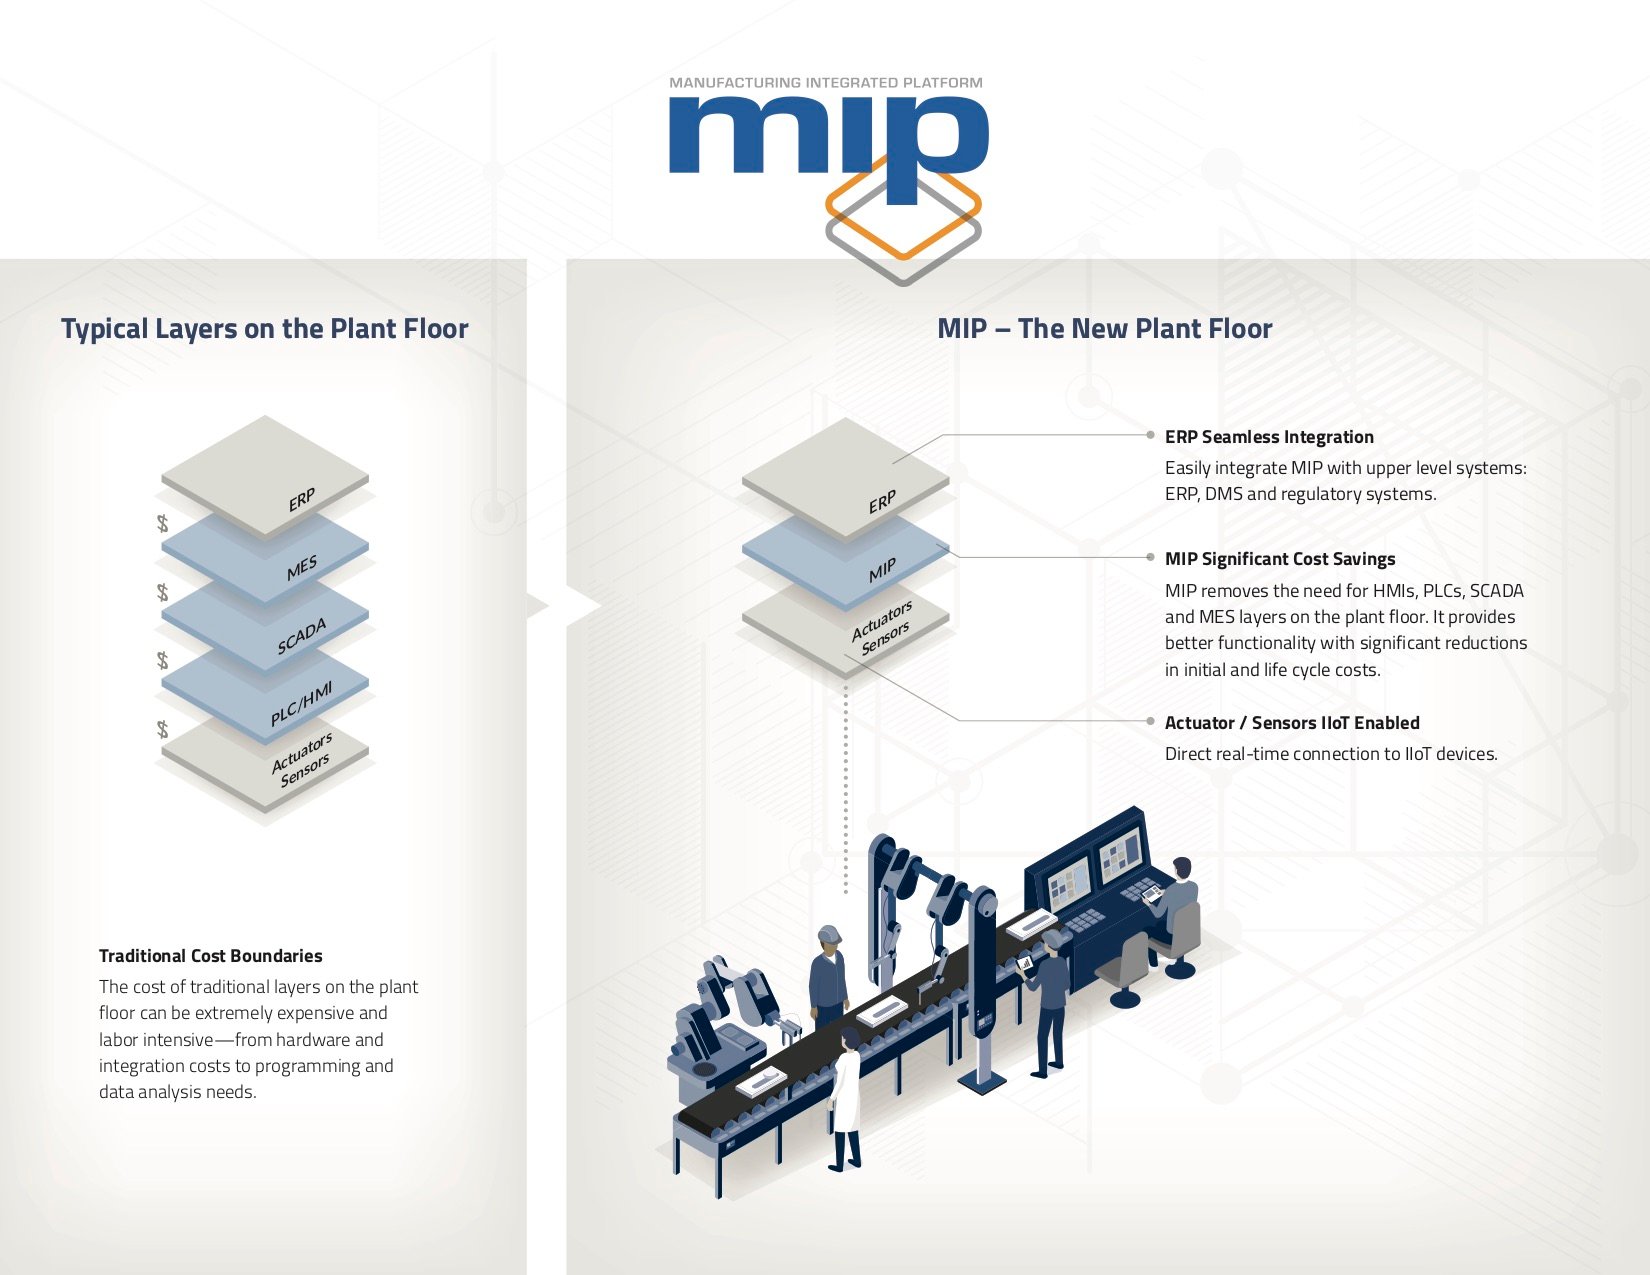 The Manufacturing Integrated Platform (MIP) Revolution